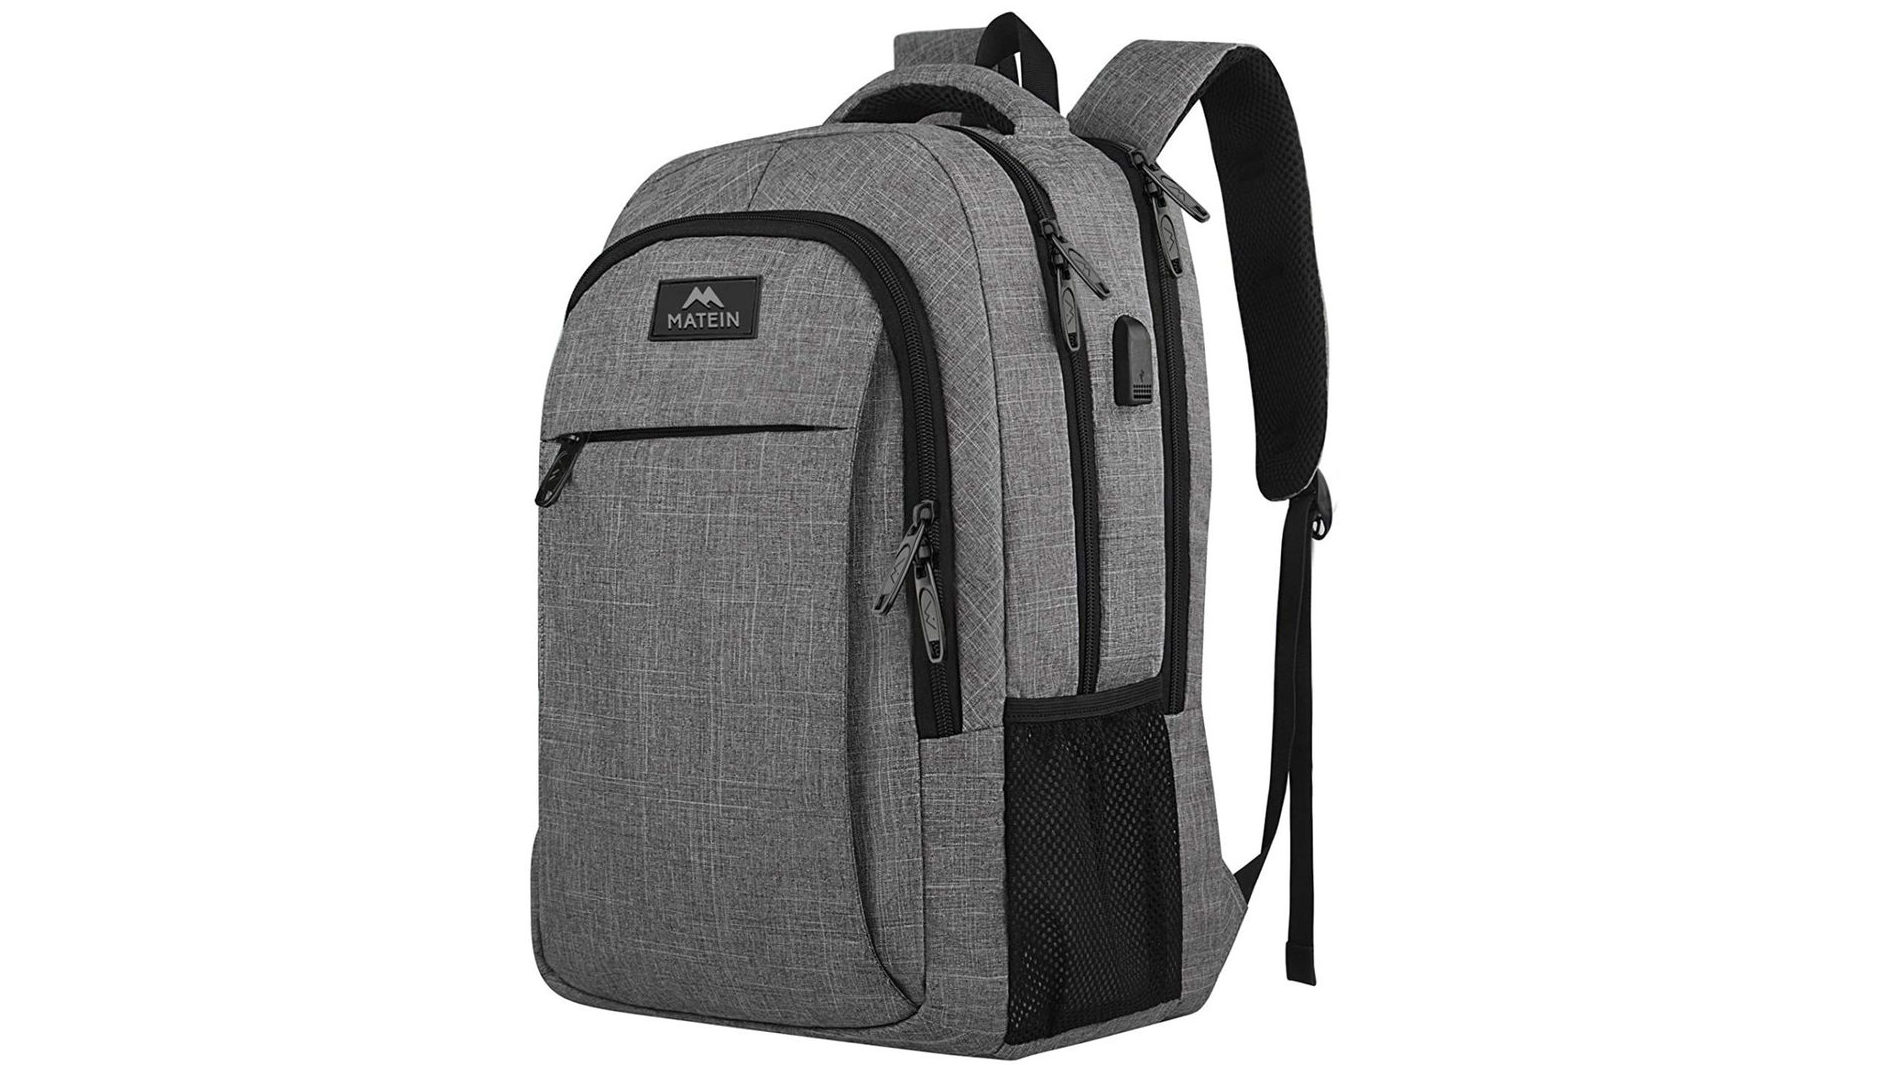 Bigfoot Ufo Theft Proof Travel Backpack Cool Bookbag With Usb Charging Port